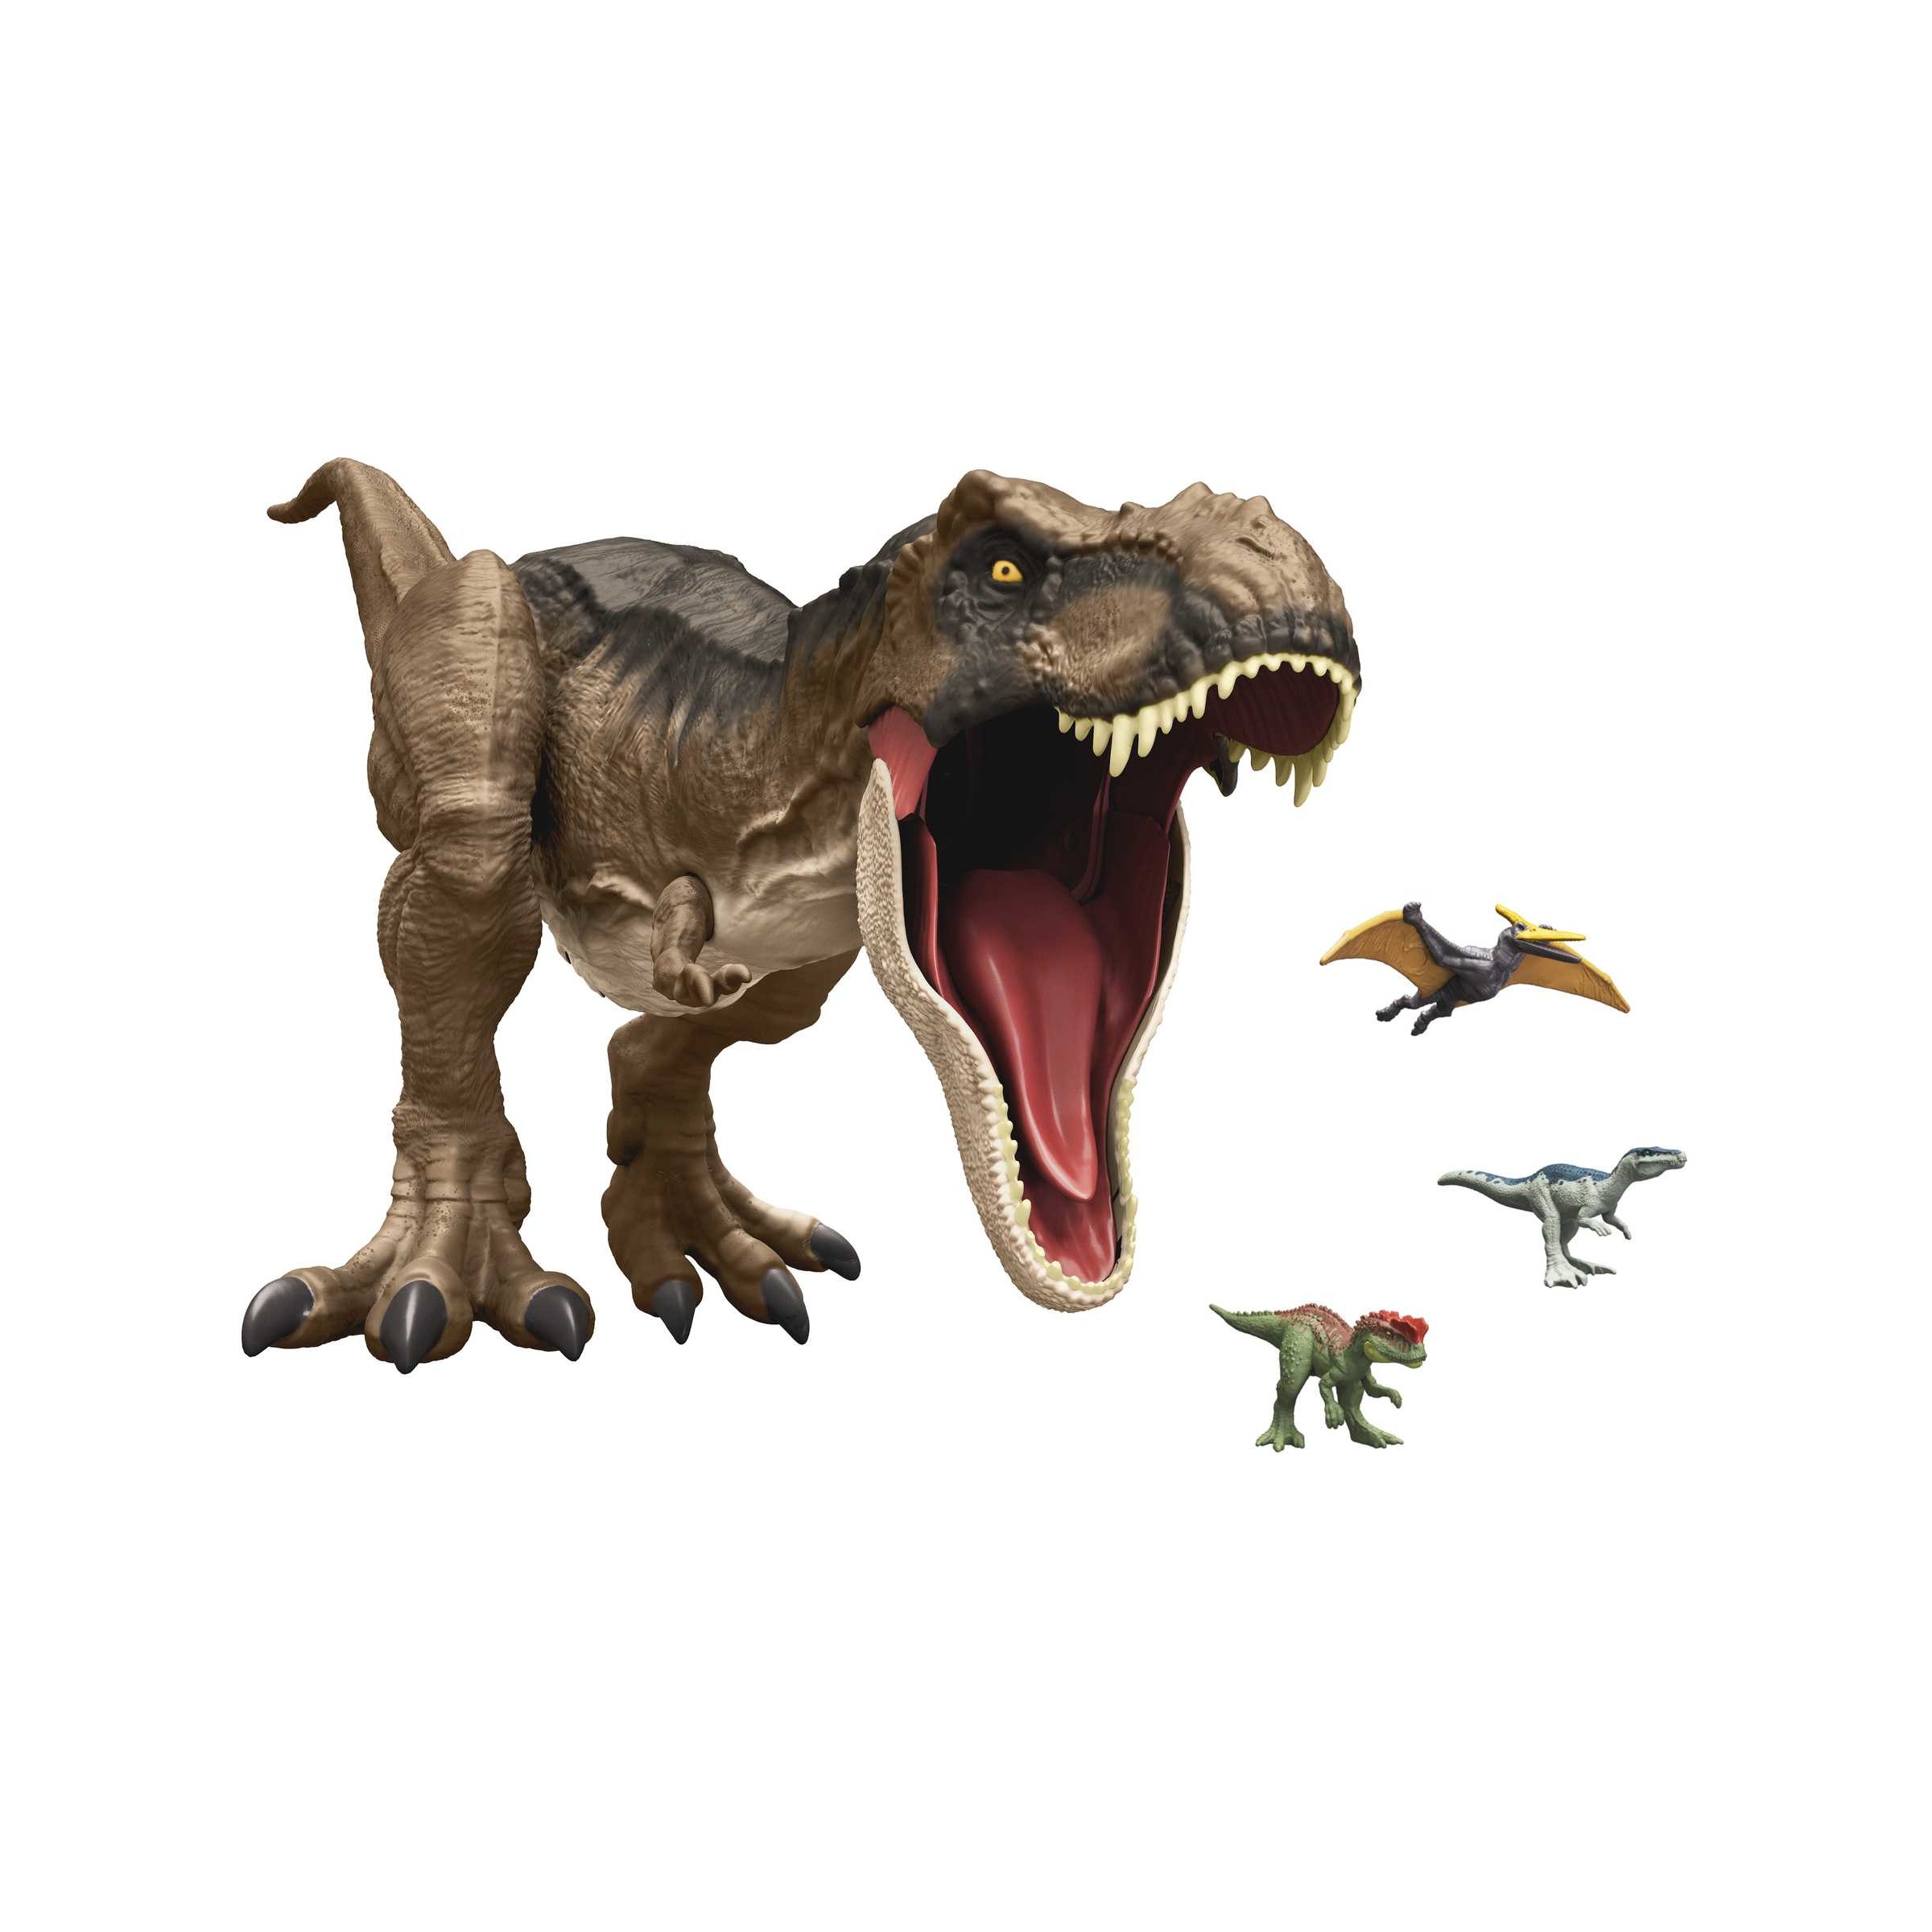 Jurassic world, super colossal tirannosauro rex snodato, giocattolo per bambini 4+ anni, hbk73 - Jurassic World